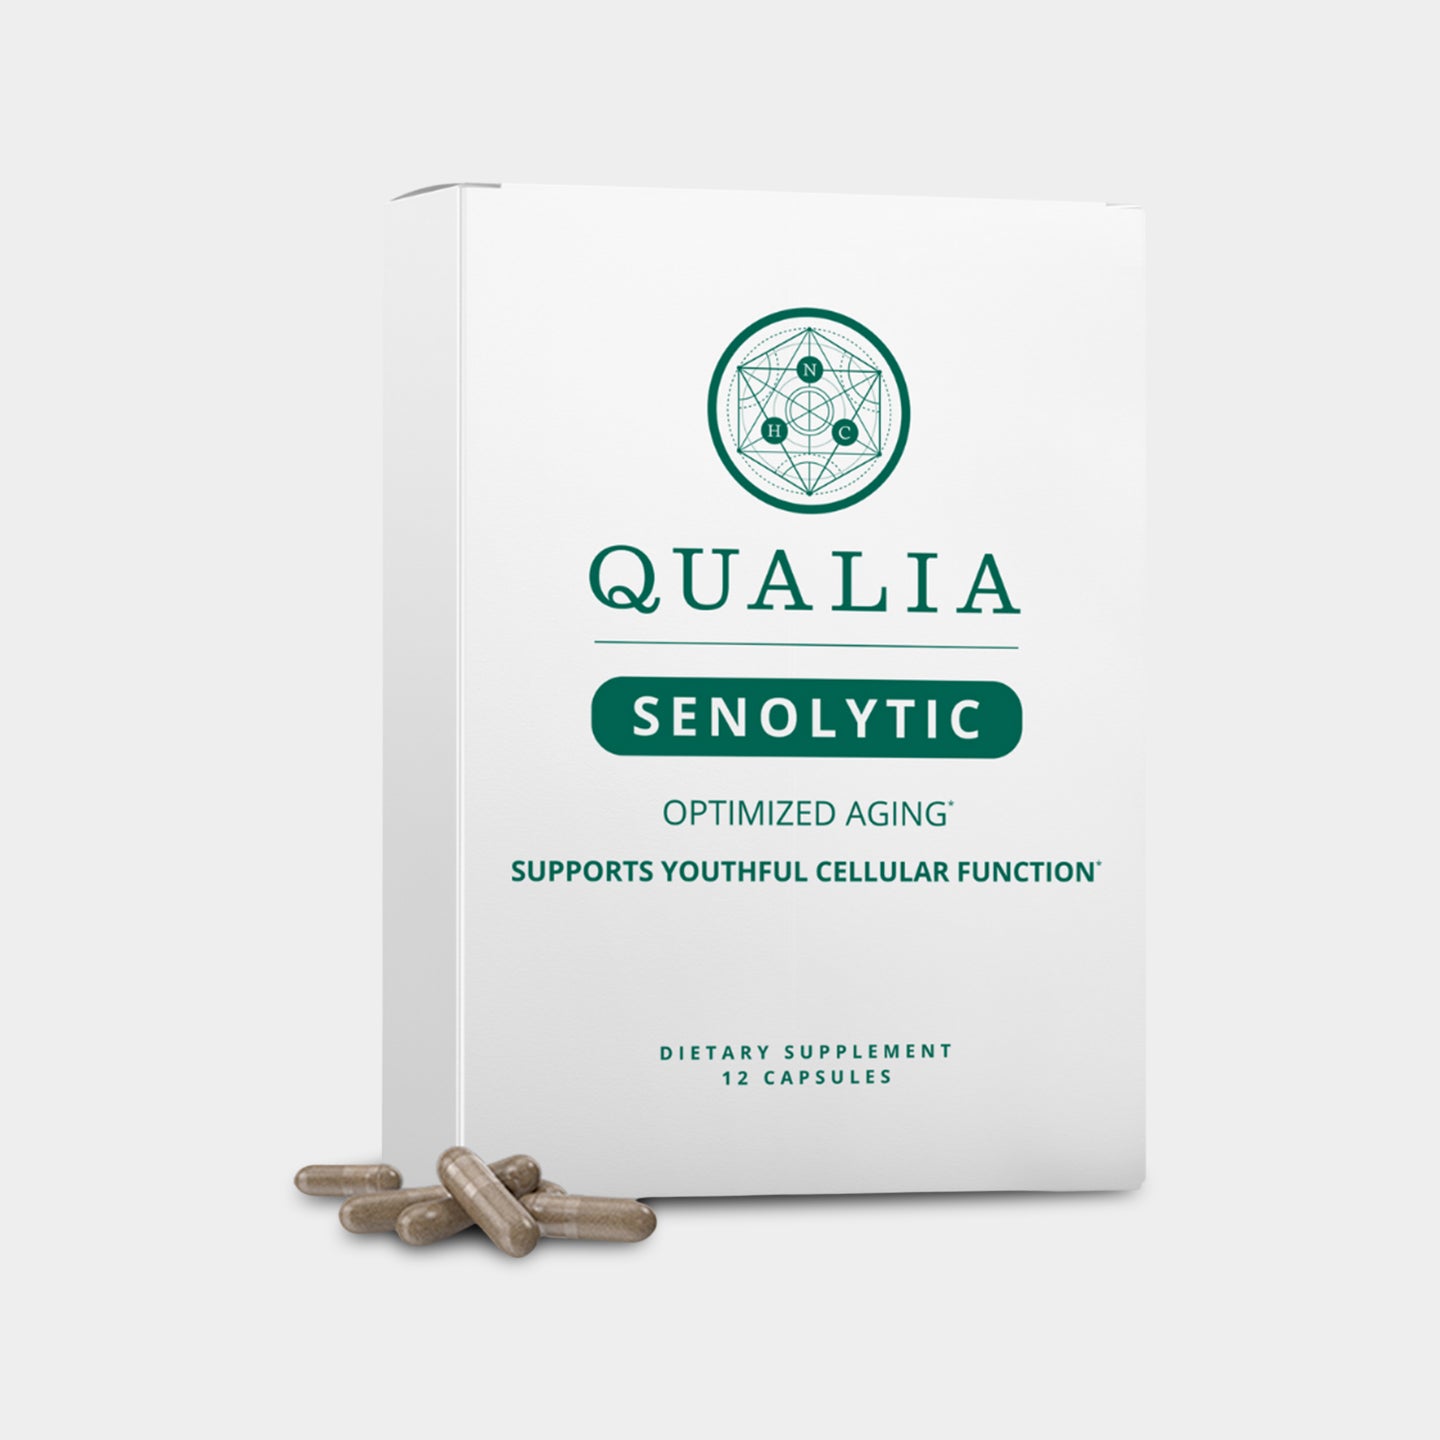 Qualia-Senolytic-2-servings-image-grey-main